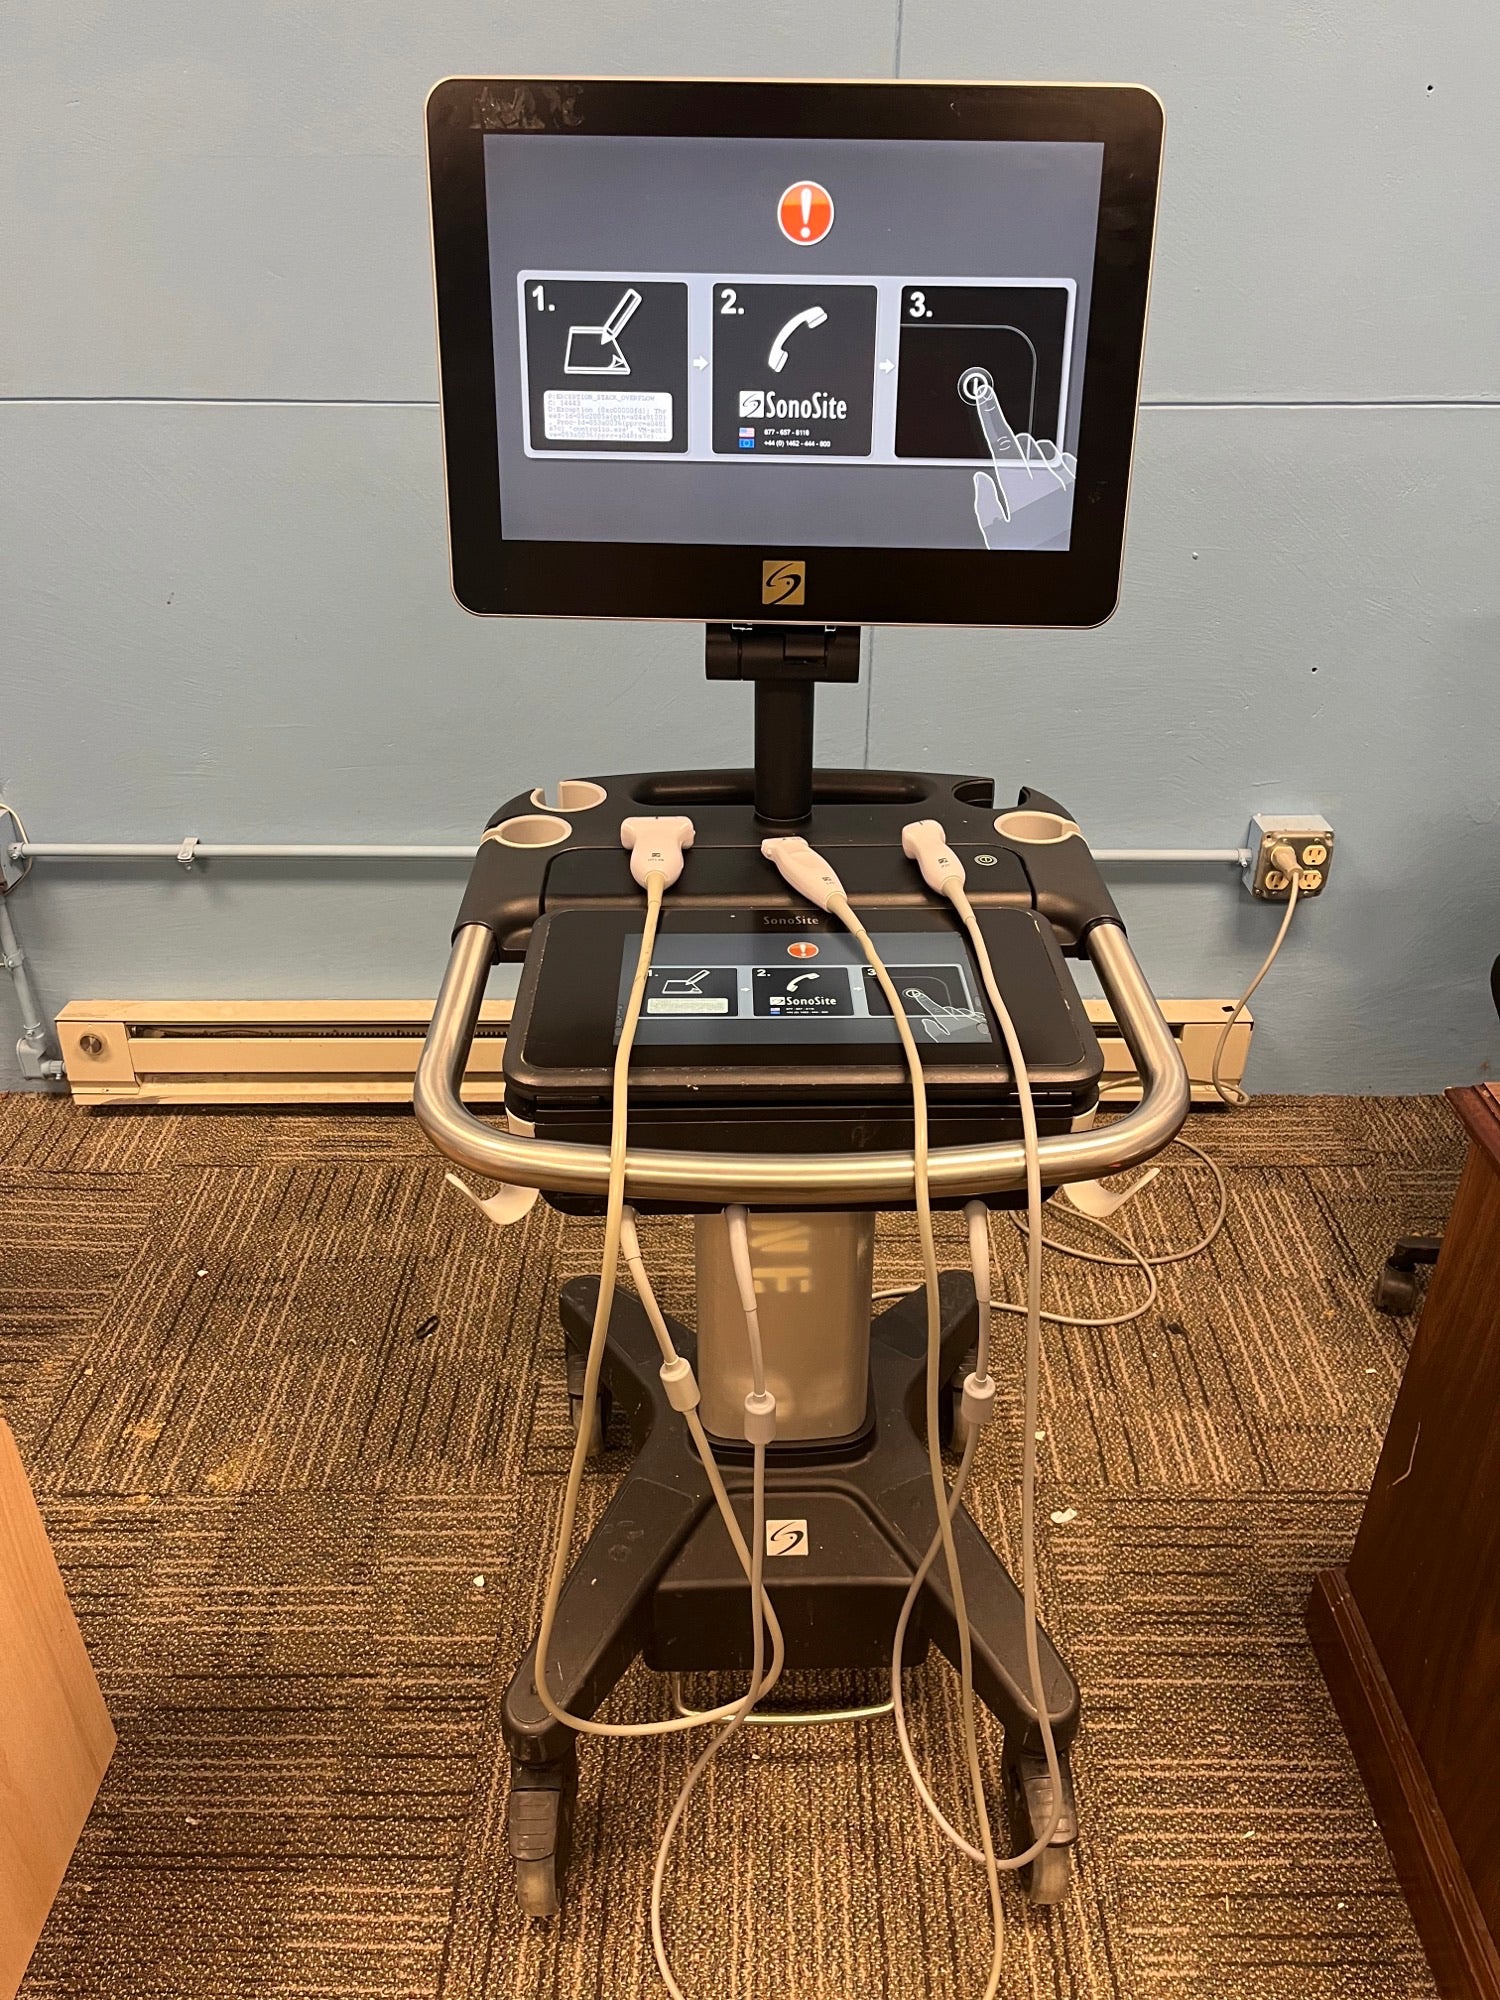 Sonosite X-Porte Ultrasound Manufactured 2020-09 DIAGNOSTIC ULTRASOUND MACHINES FOR SALE